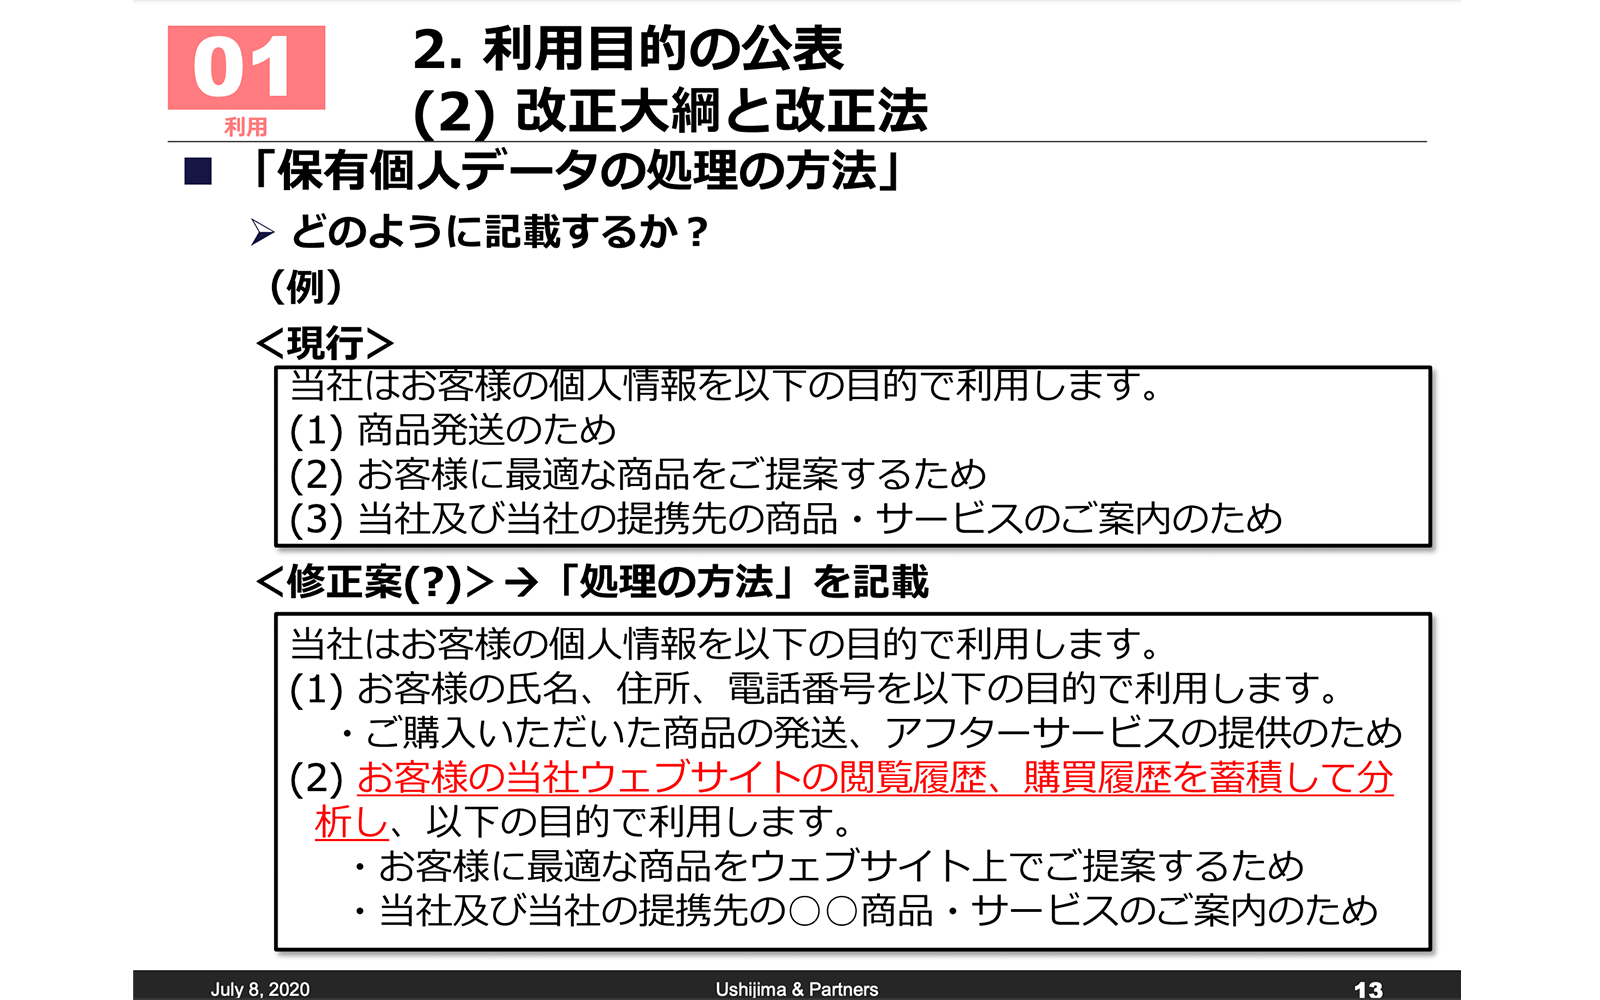 https://www.jipdec.or.jp/sp/library/report/u71kba000000zyme-att/20200708_95thjipdecseminar.pdf 2020年7月28日最終アクセス